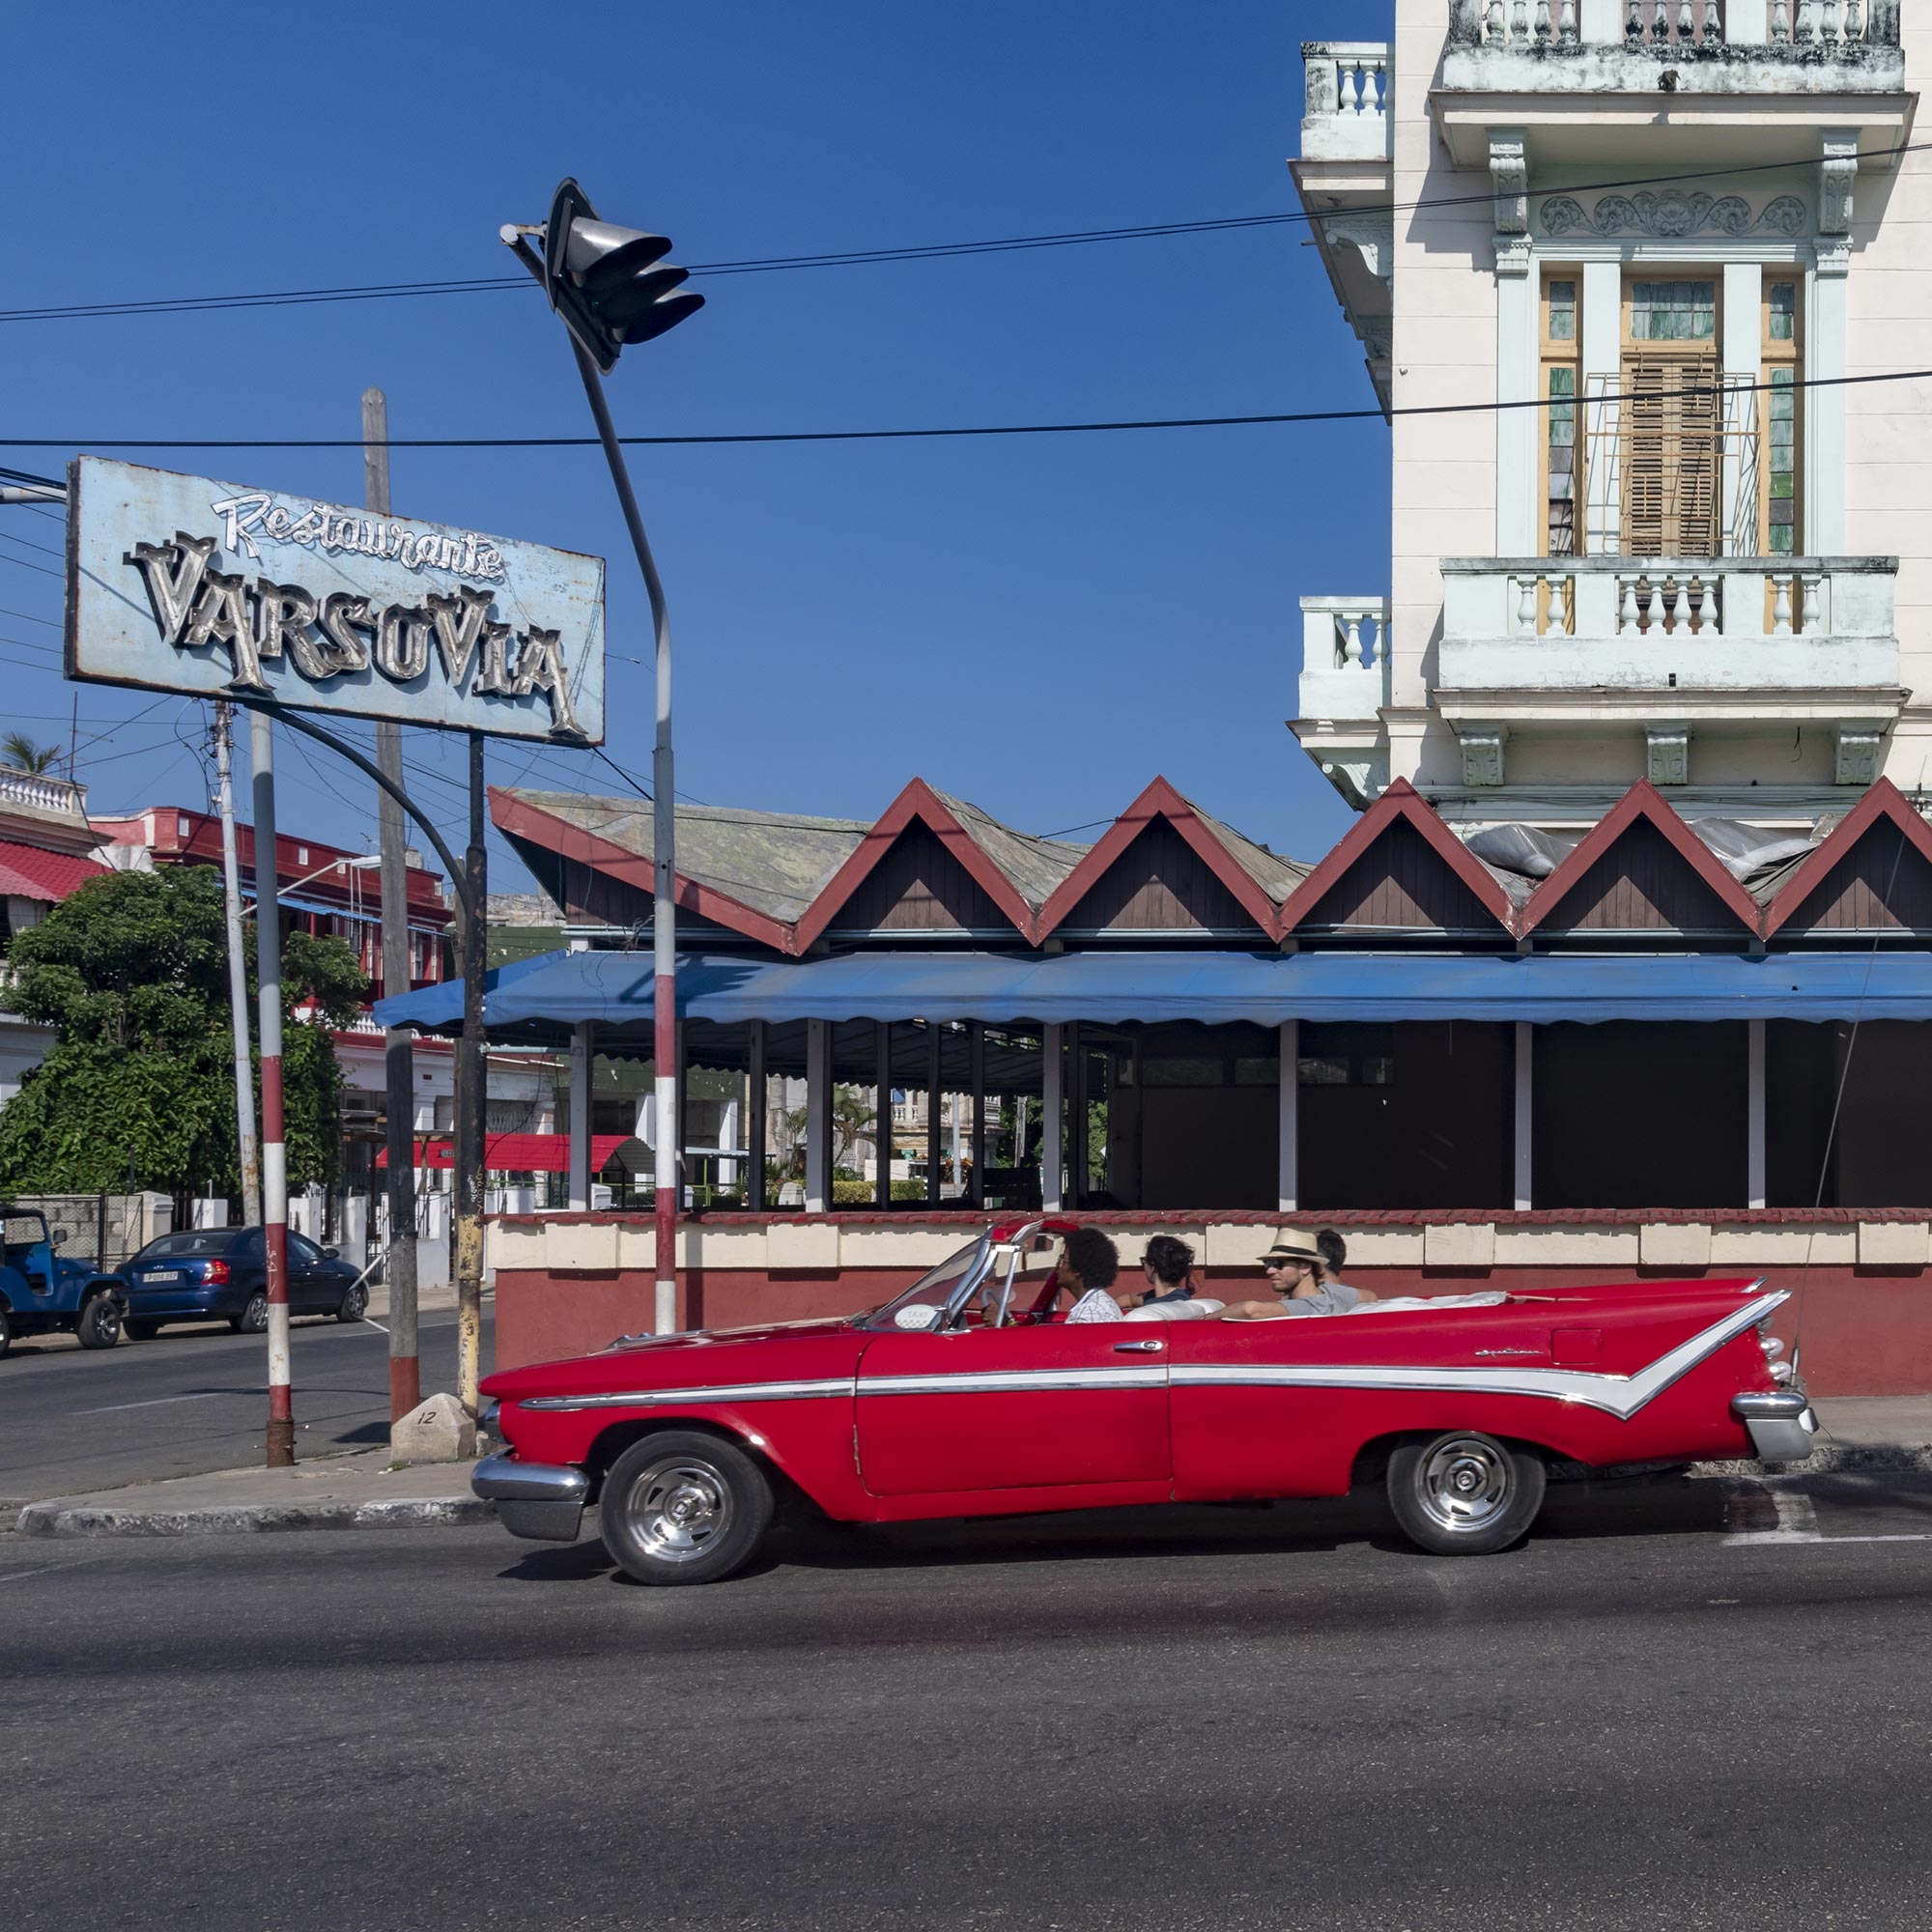 Havana, Cuba. Shot by Colin Walton at WaltonCreative